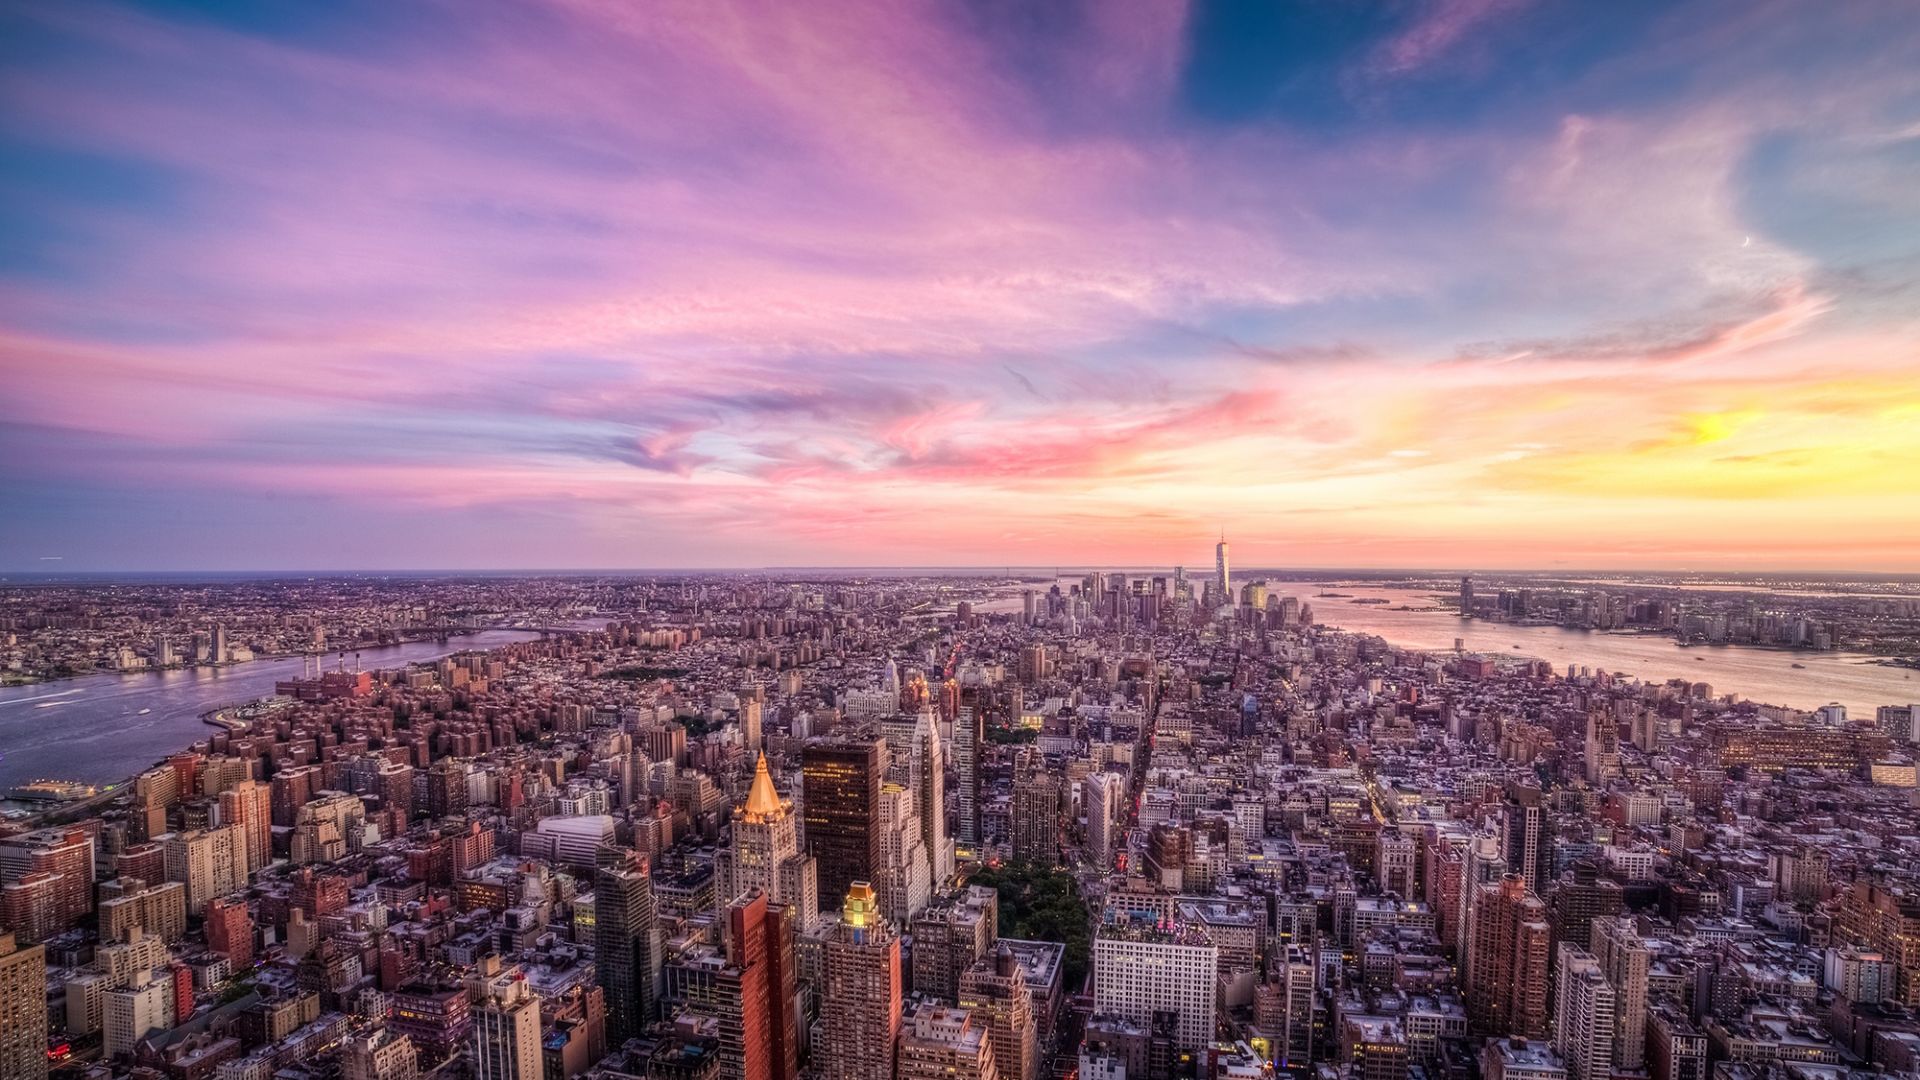 Desktop wallpaper purple sunset of new york city usa wa hd image picture background jmnh